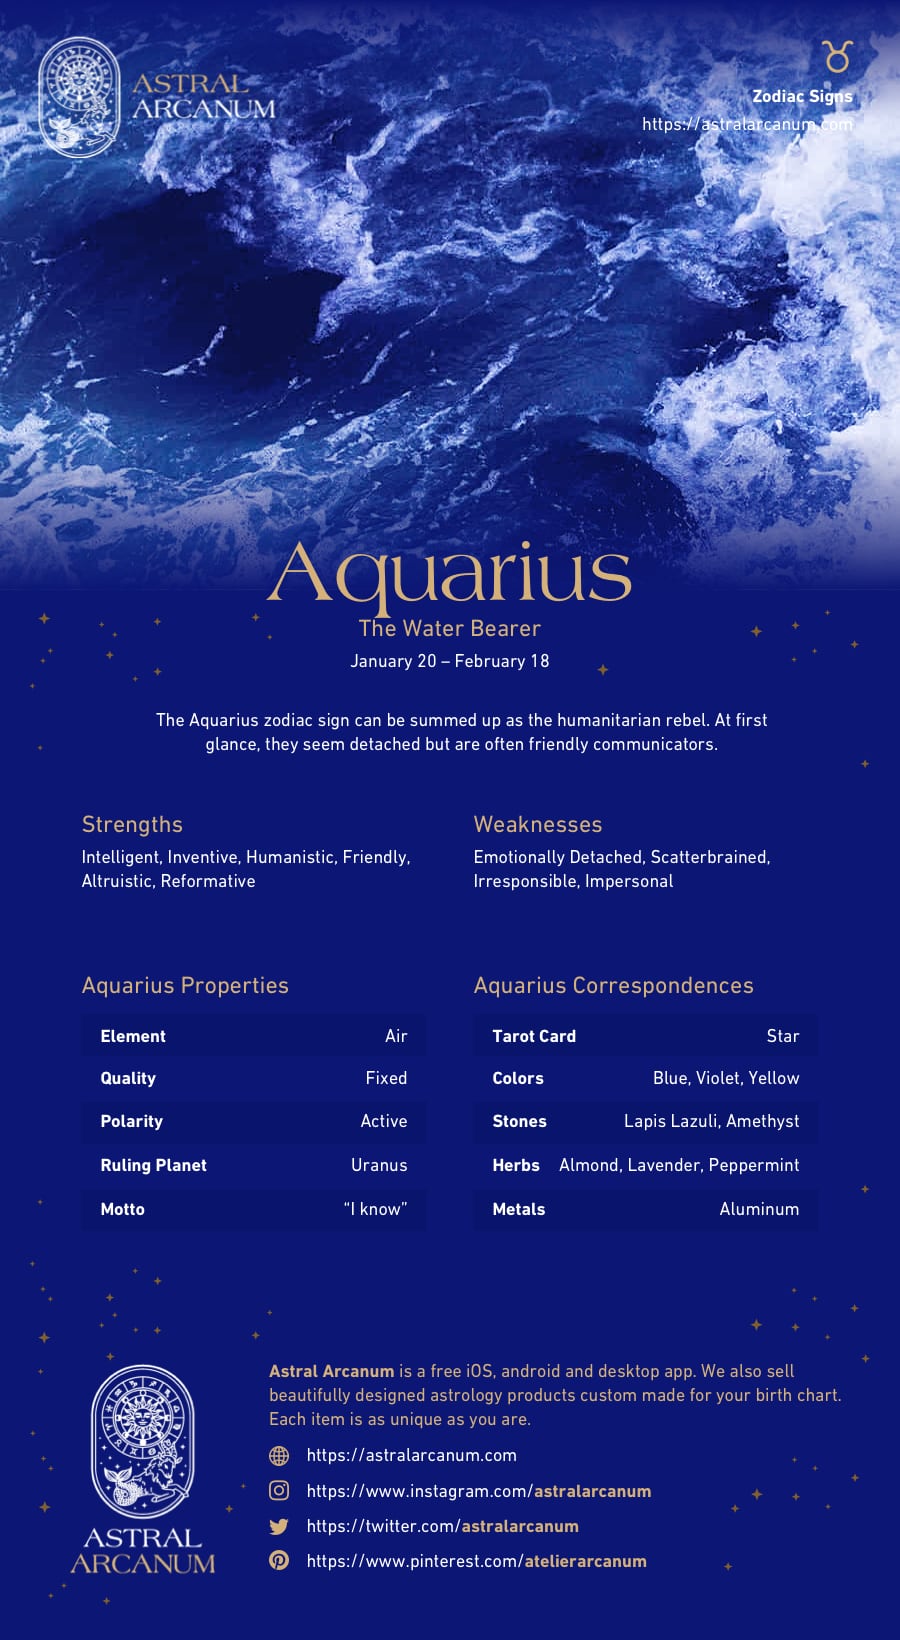 Astrology Zodiac Sign Aquarius Infographic - Aquarius Personality, Aquarius Careers, Aquarius Work, Aquarius Correspondences